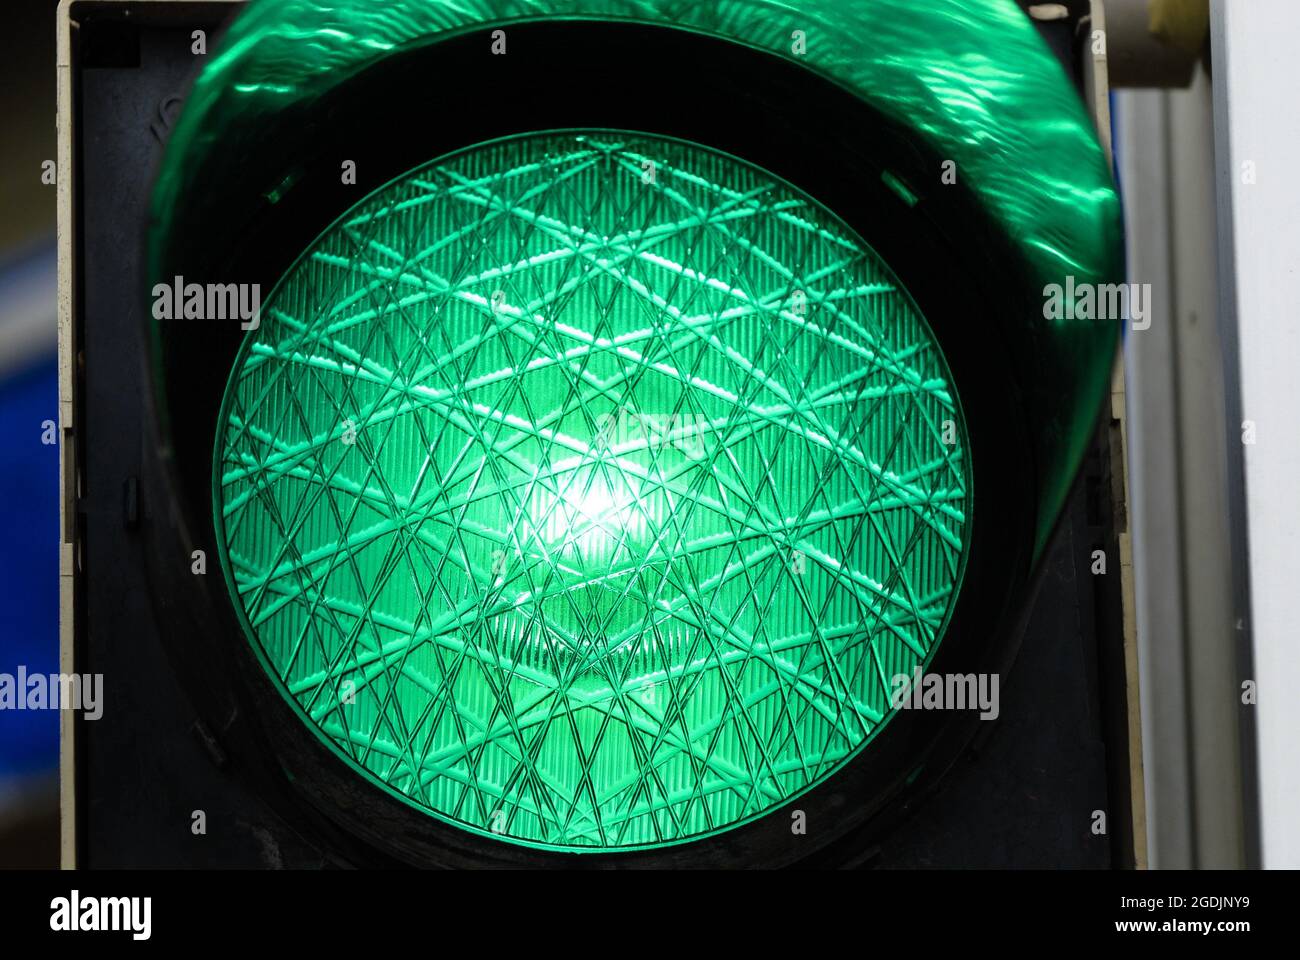 green traffic light, Germany Stock Photo